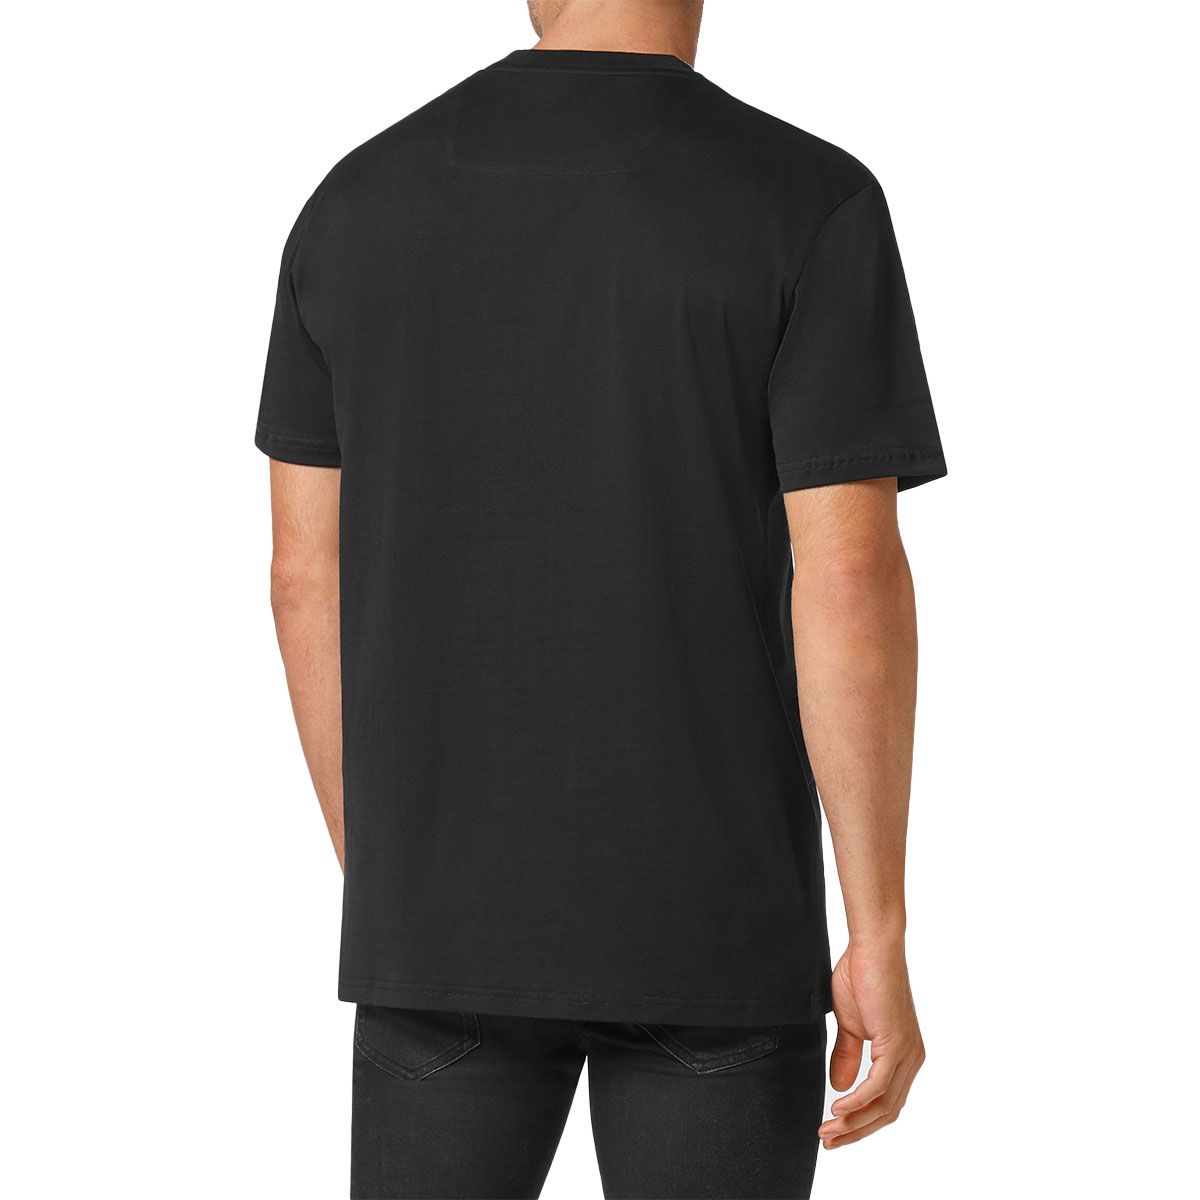 Hexagon Black T-Shirt